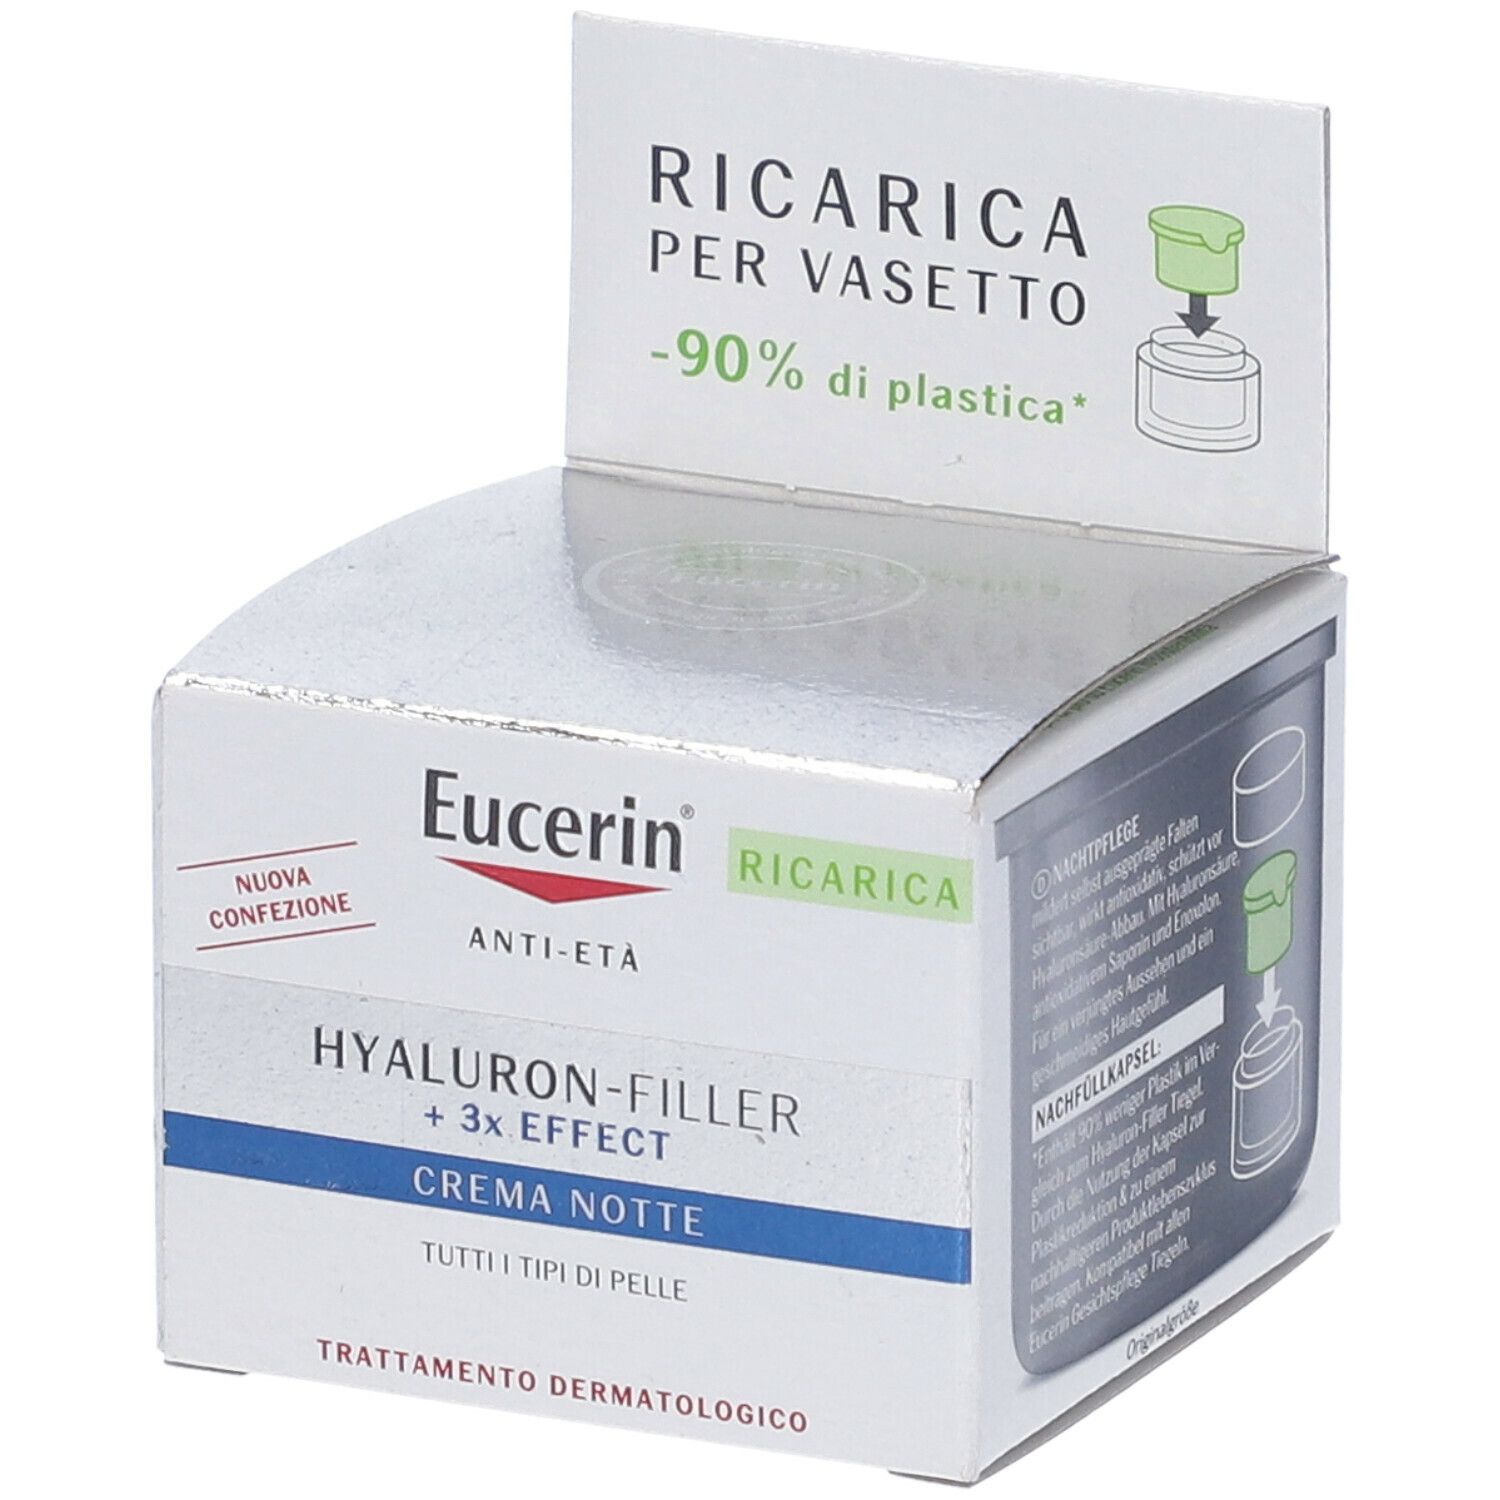 Image of Eucerin® Ricarica Eucerin Hyaluron-Filler +3x Effect Crema Notte